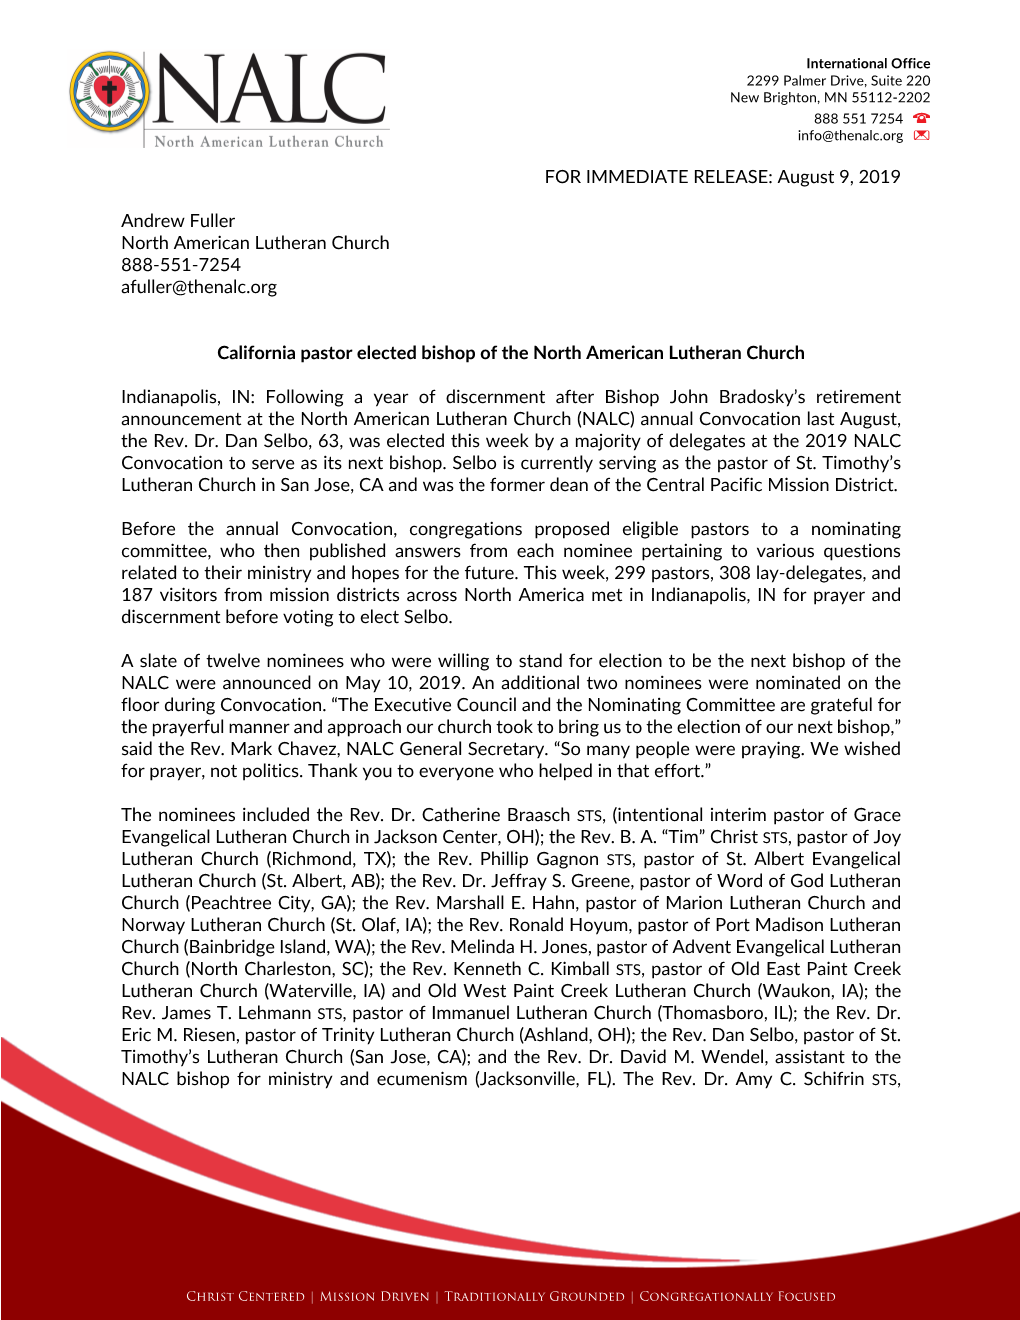 Bishop Election Press Release